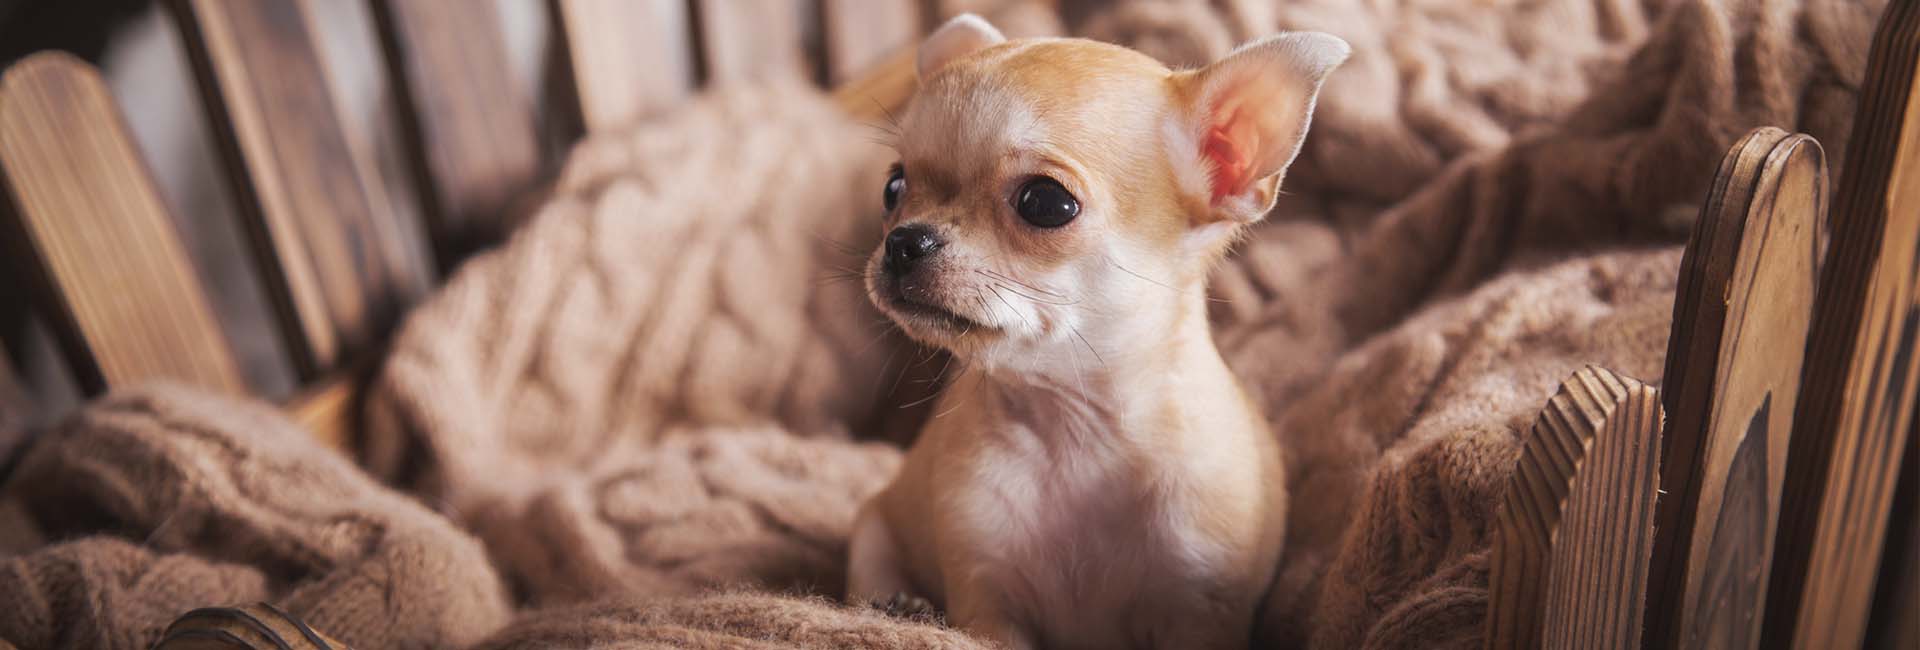 Contacto para comprar cachorro chihuahua, Chihuahuas Mexicanos